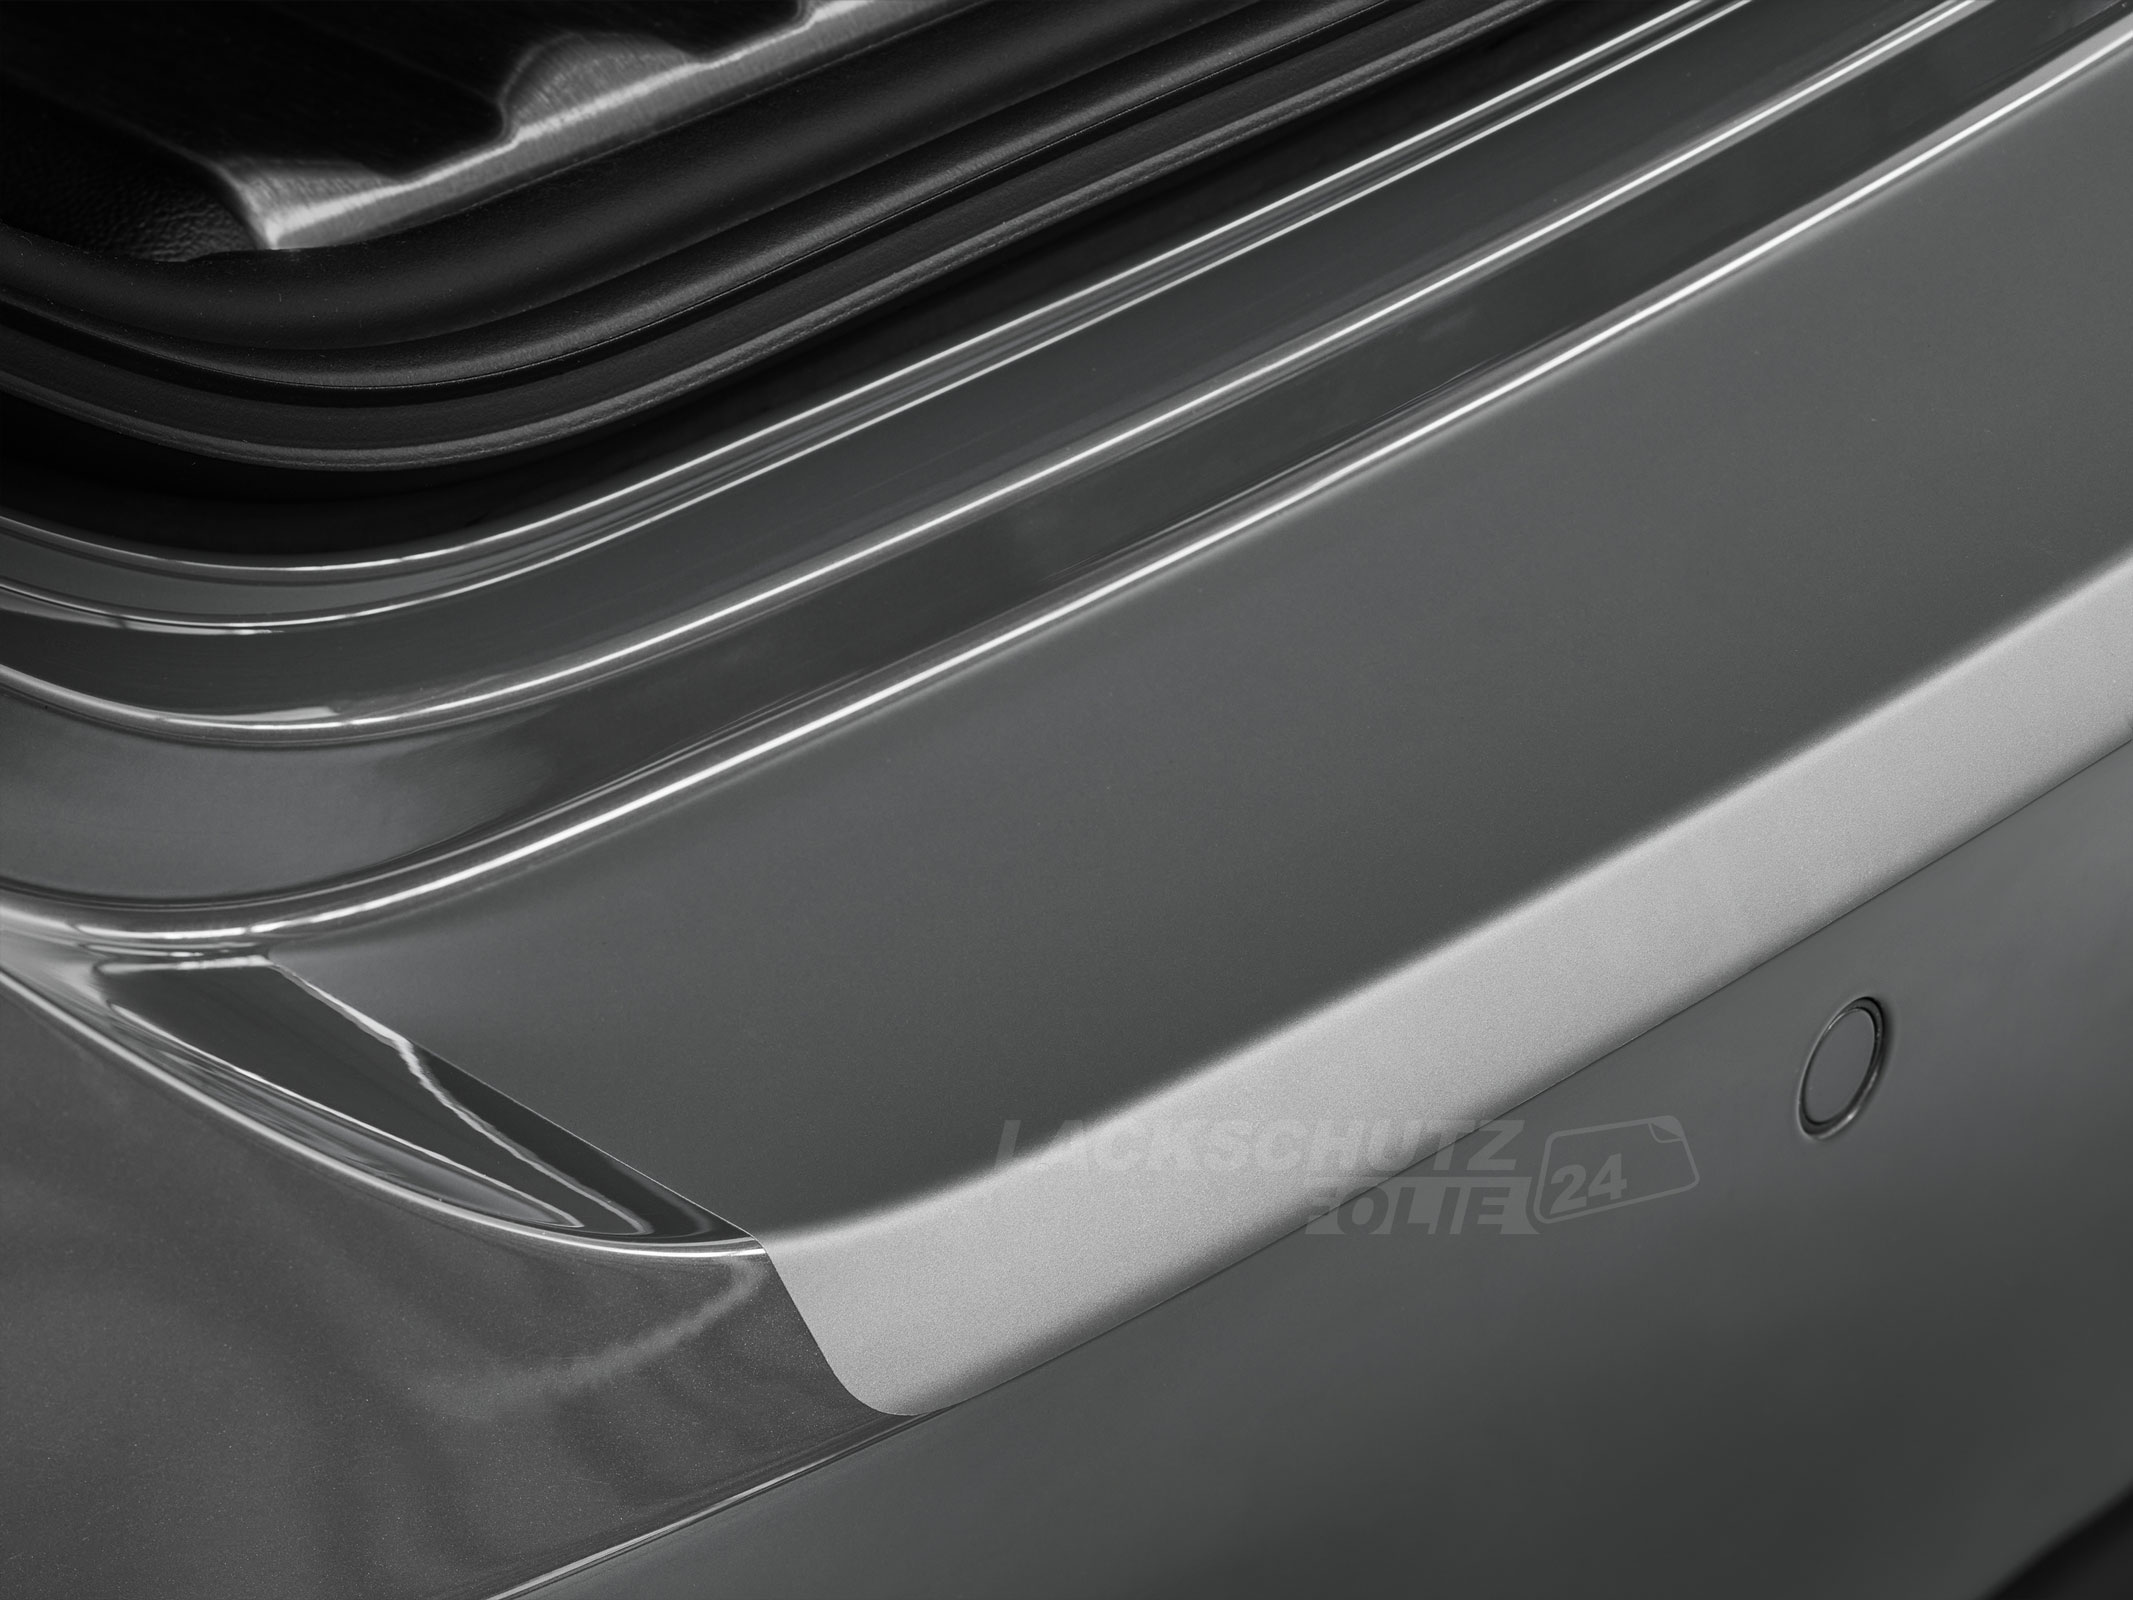 Ladekantenschutzfolie - Transparent Glatt MATT 110 µm stark  für Audi A3 Cabrio Typ 8P, BJ 2008-2014